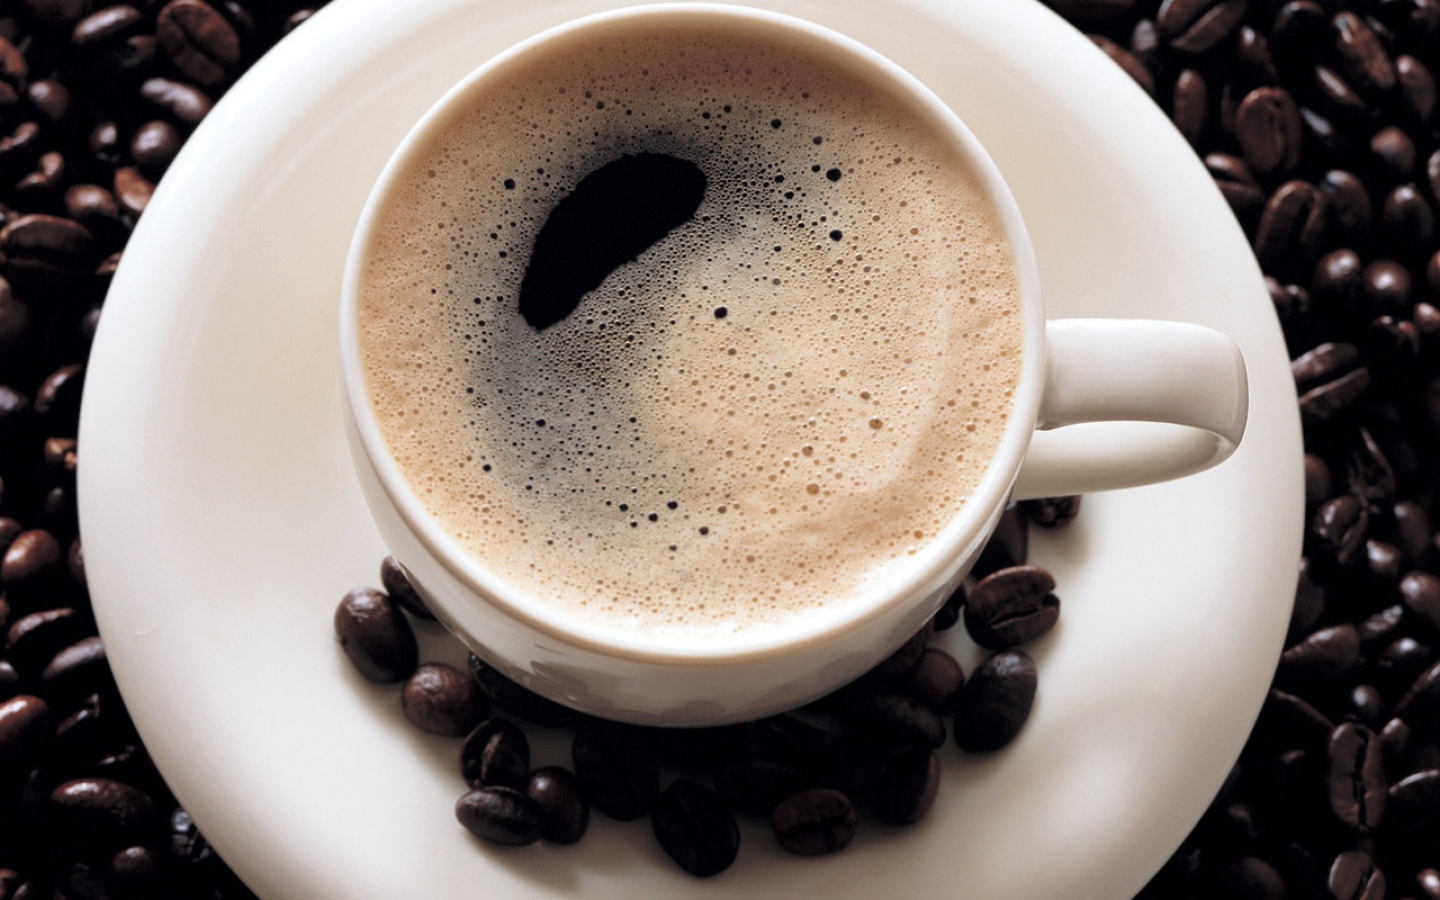 coffee-foam-drink-coffee-beans-87384-1440x900-d1aebacf4313800a105511259c1bba87.jpg